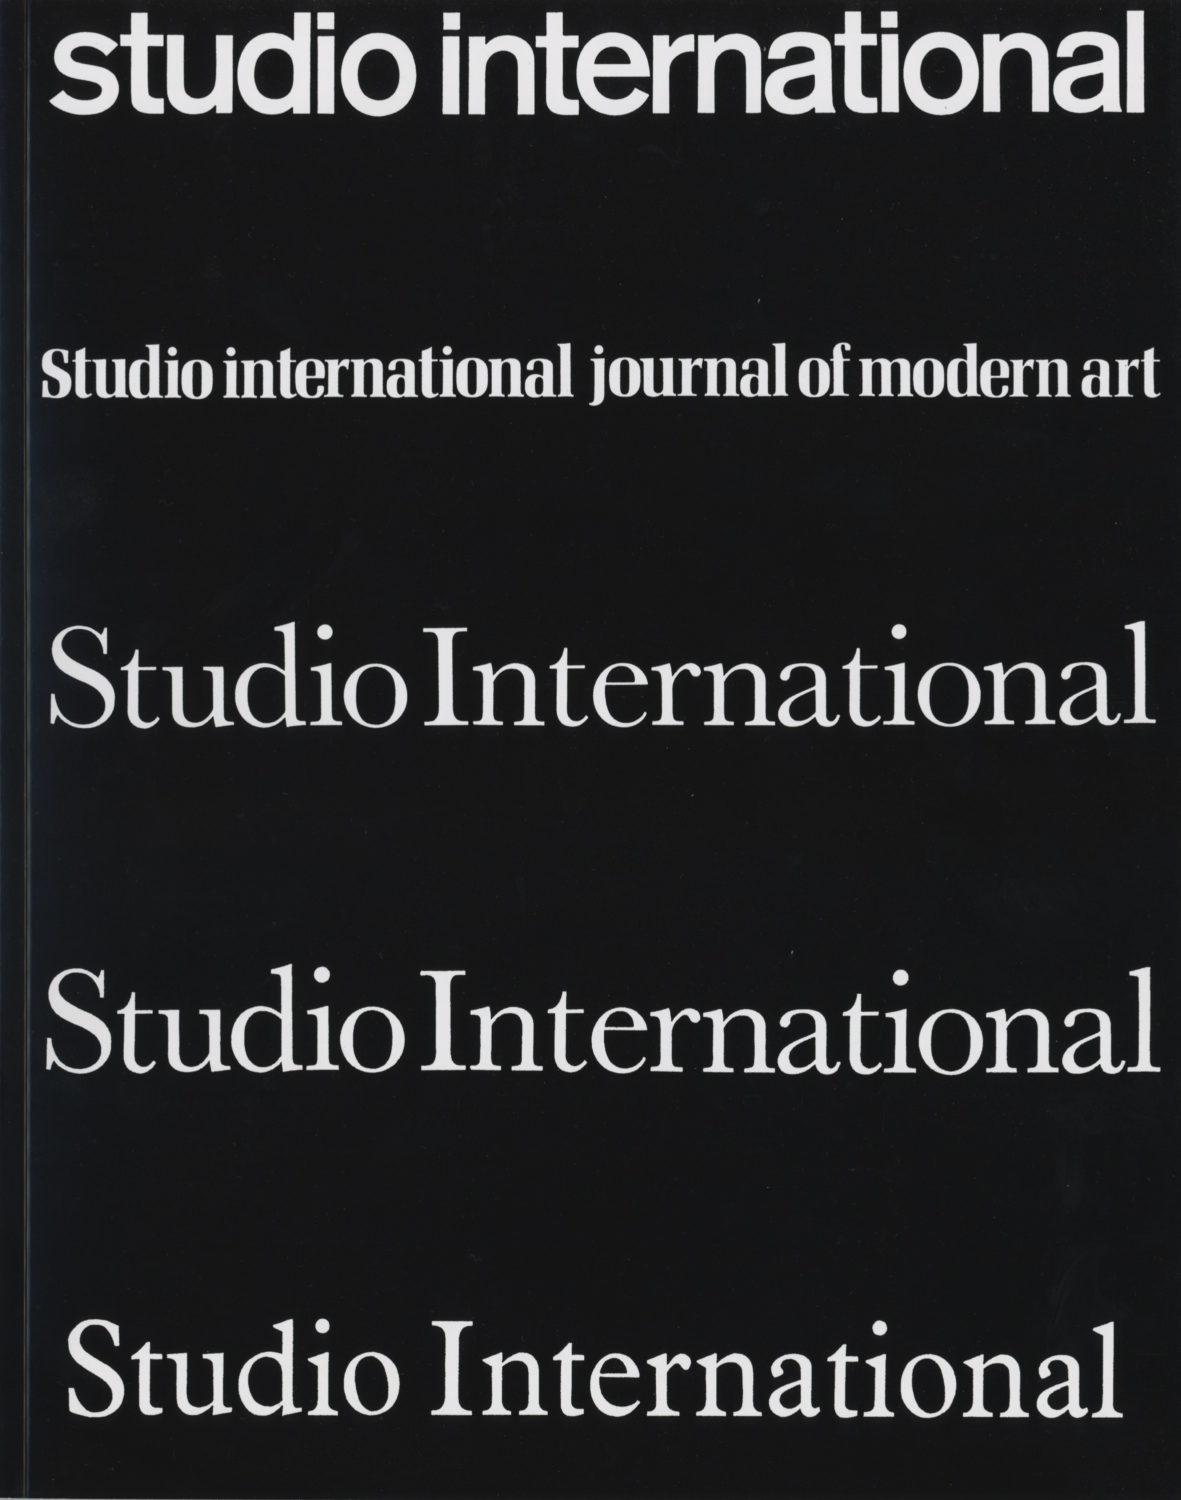 Five Issues of Studio International